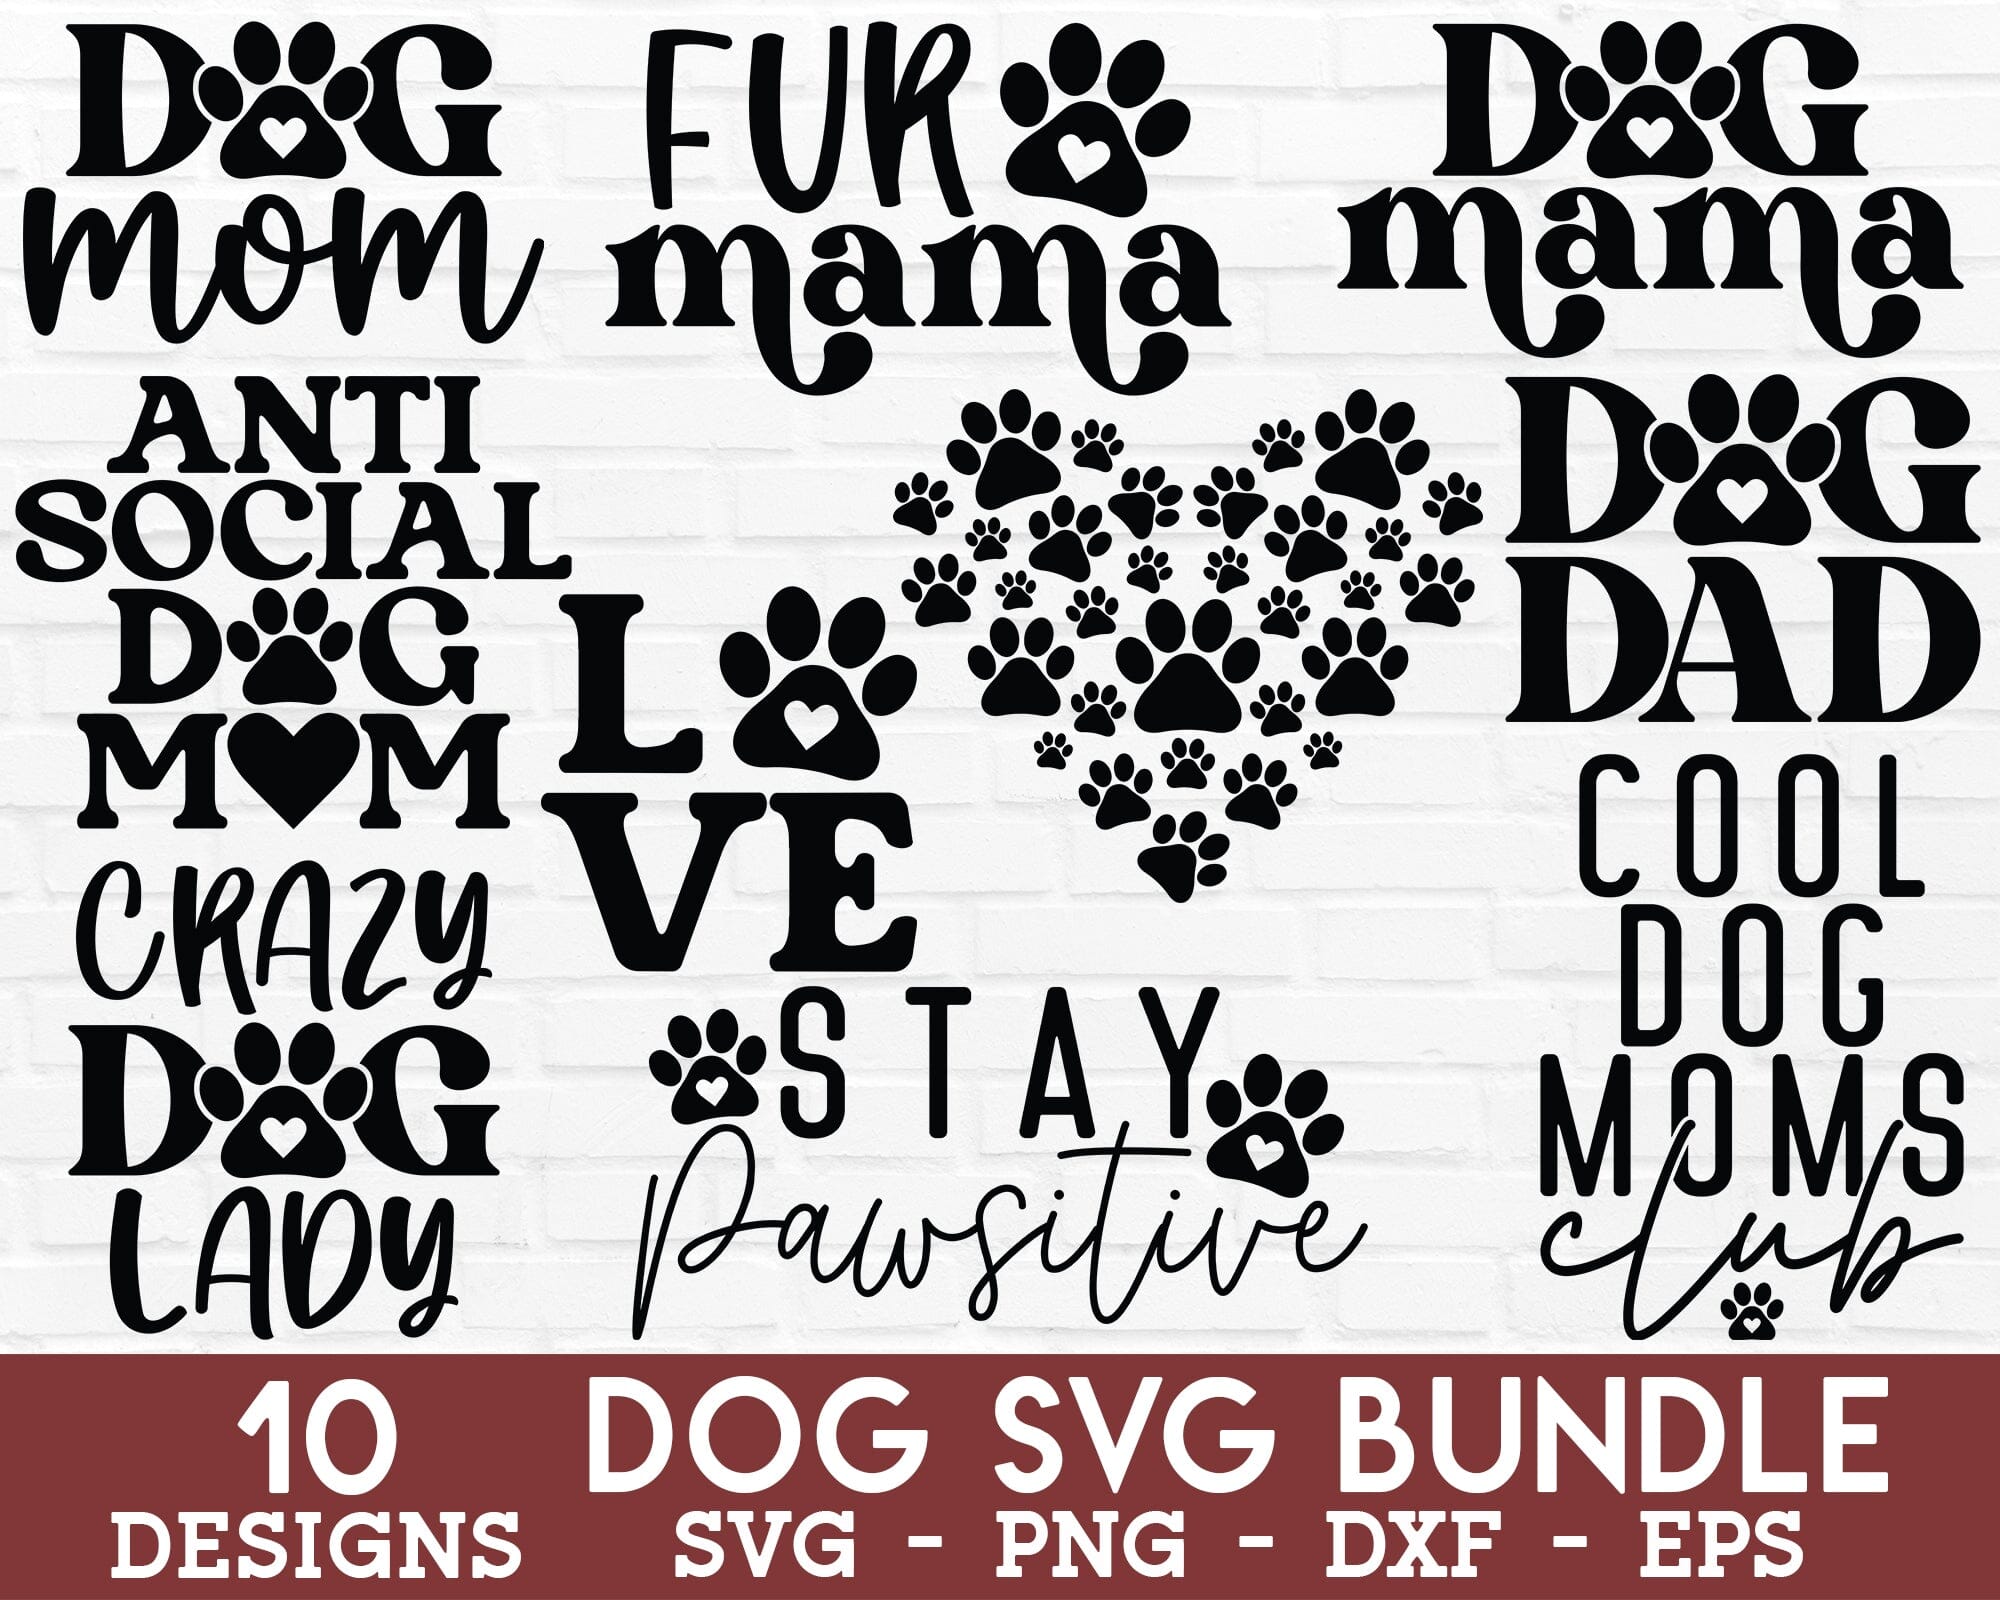 Dog Mom SVG Dog Lover SVG Dog breed dog face dog dad paw print dog